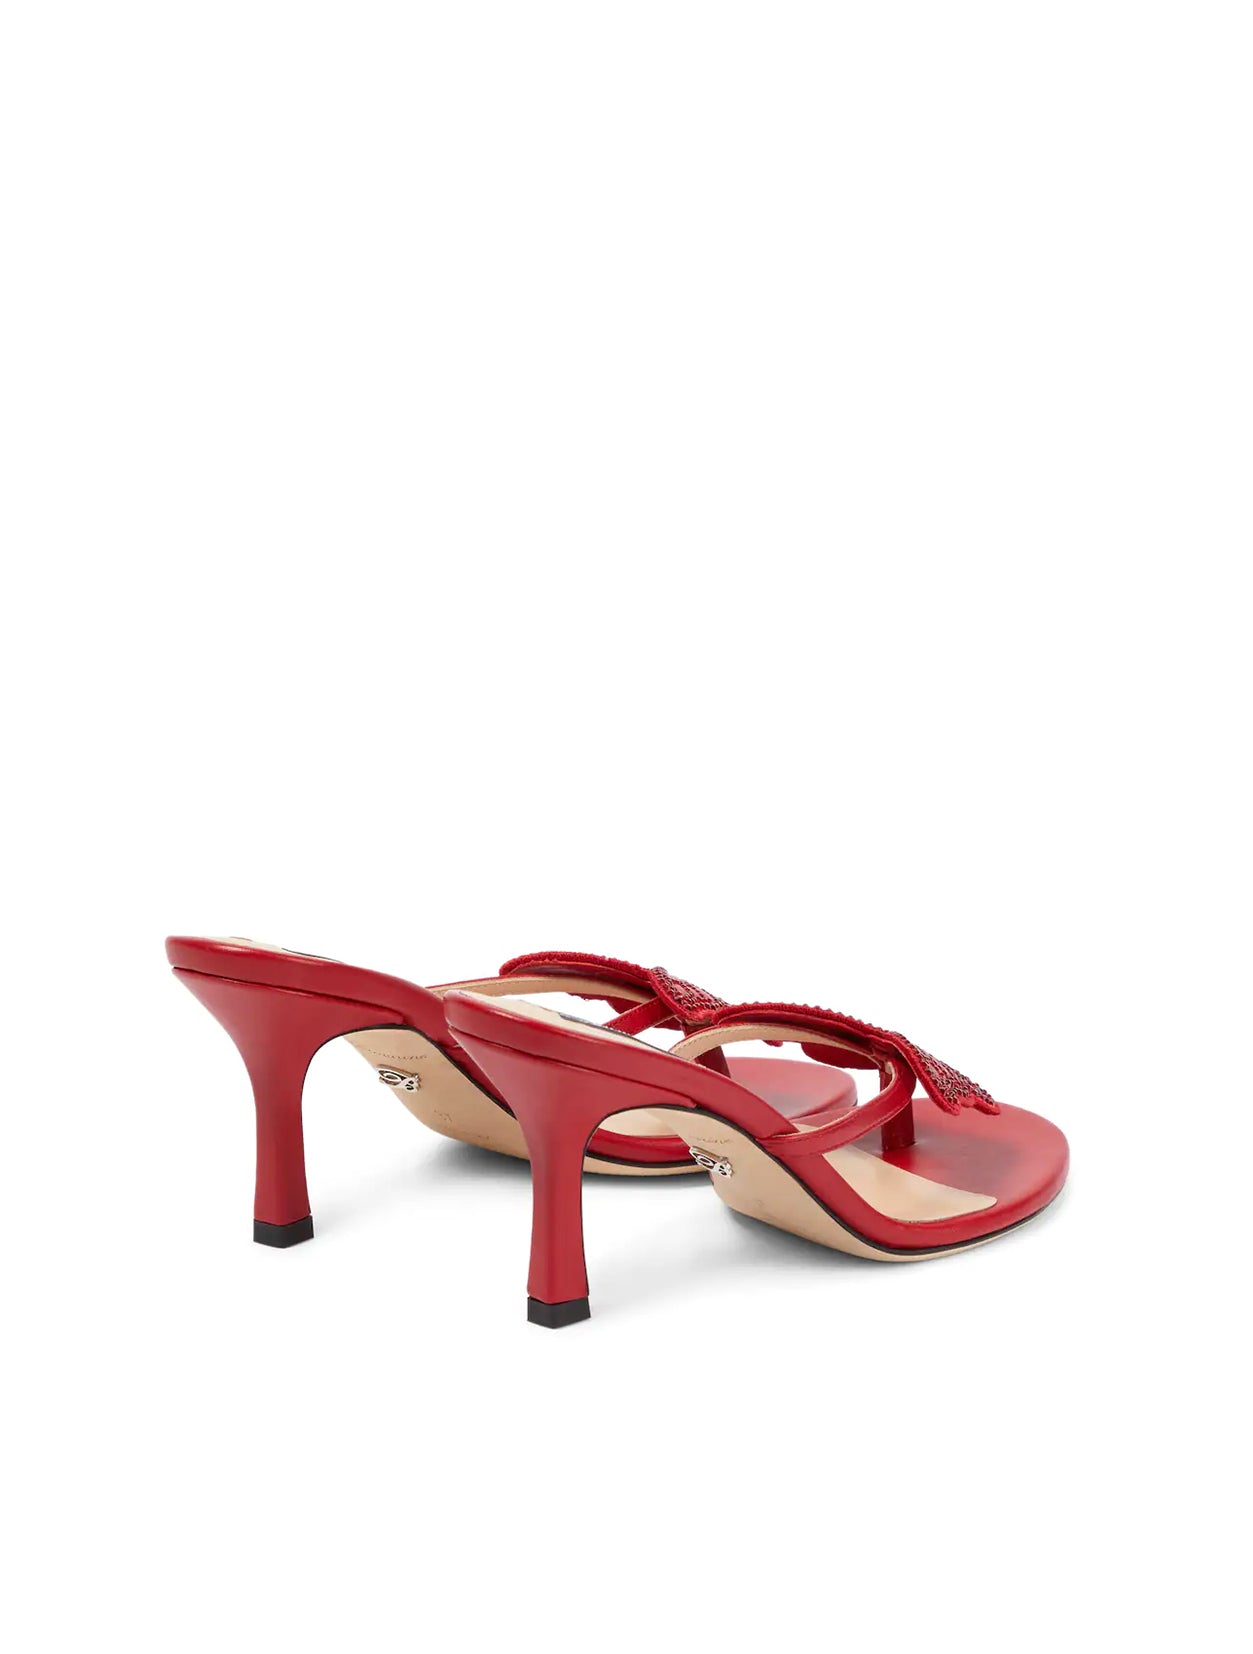 Blumarine Red Embellished Thong Sandals